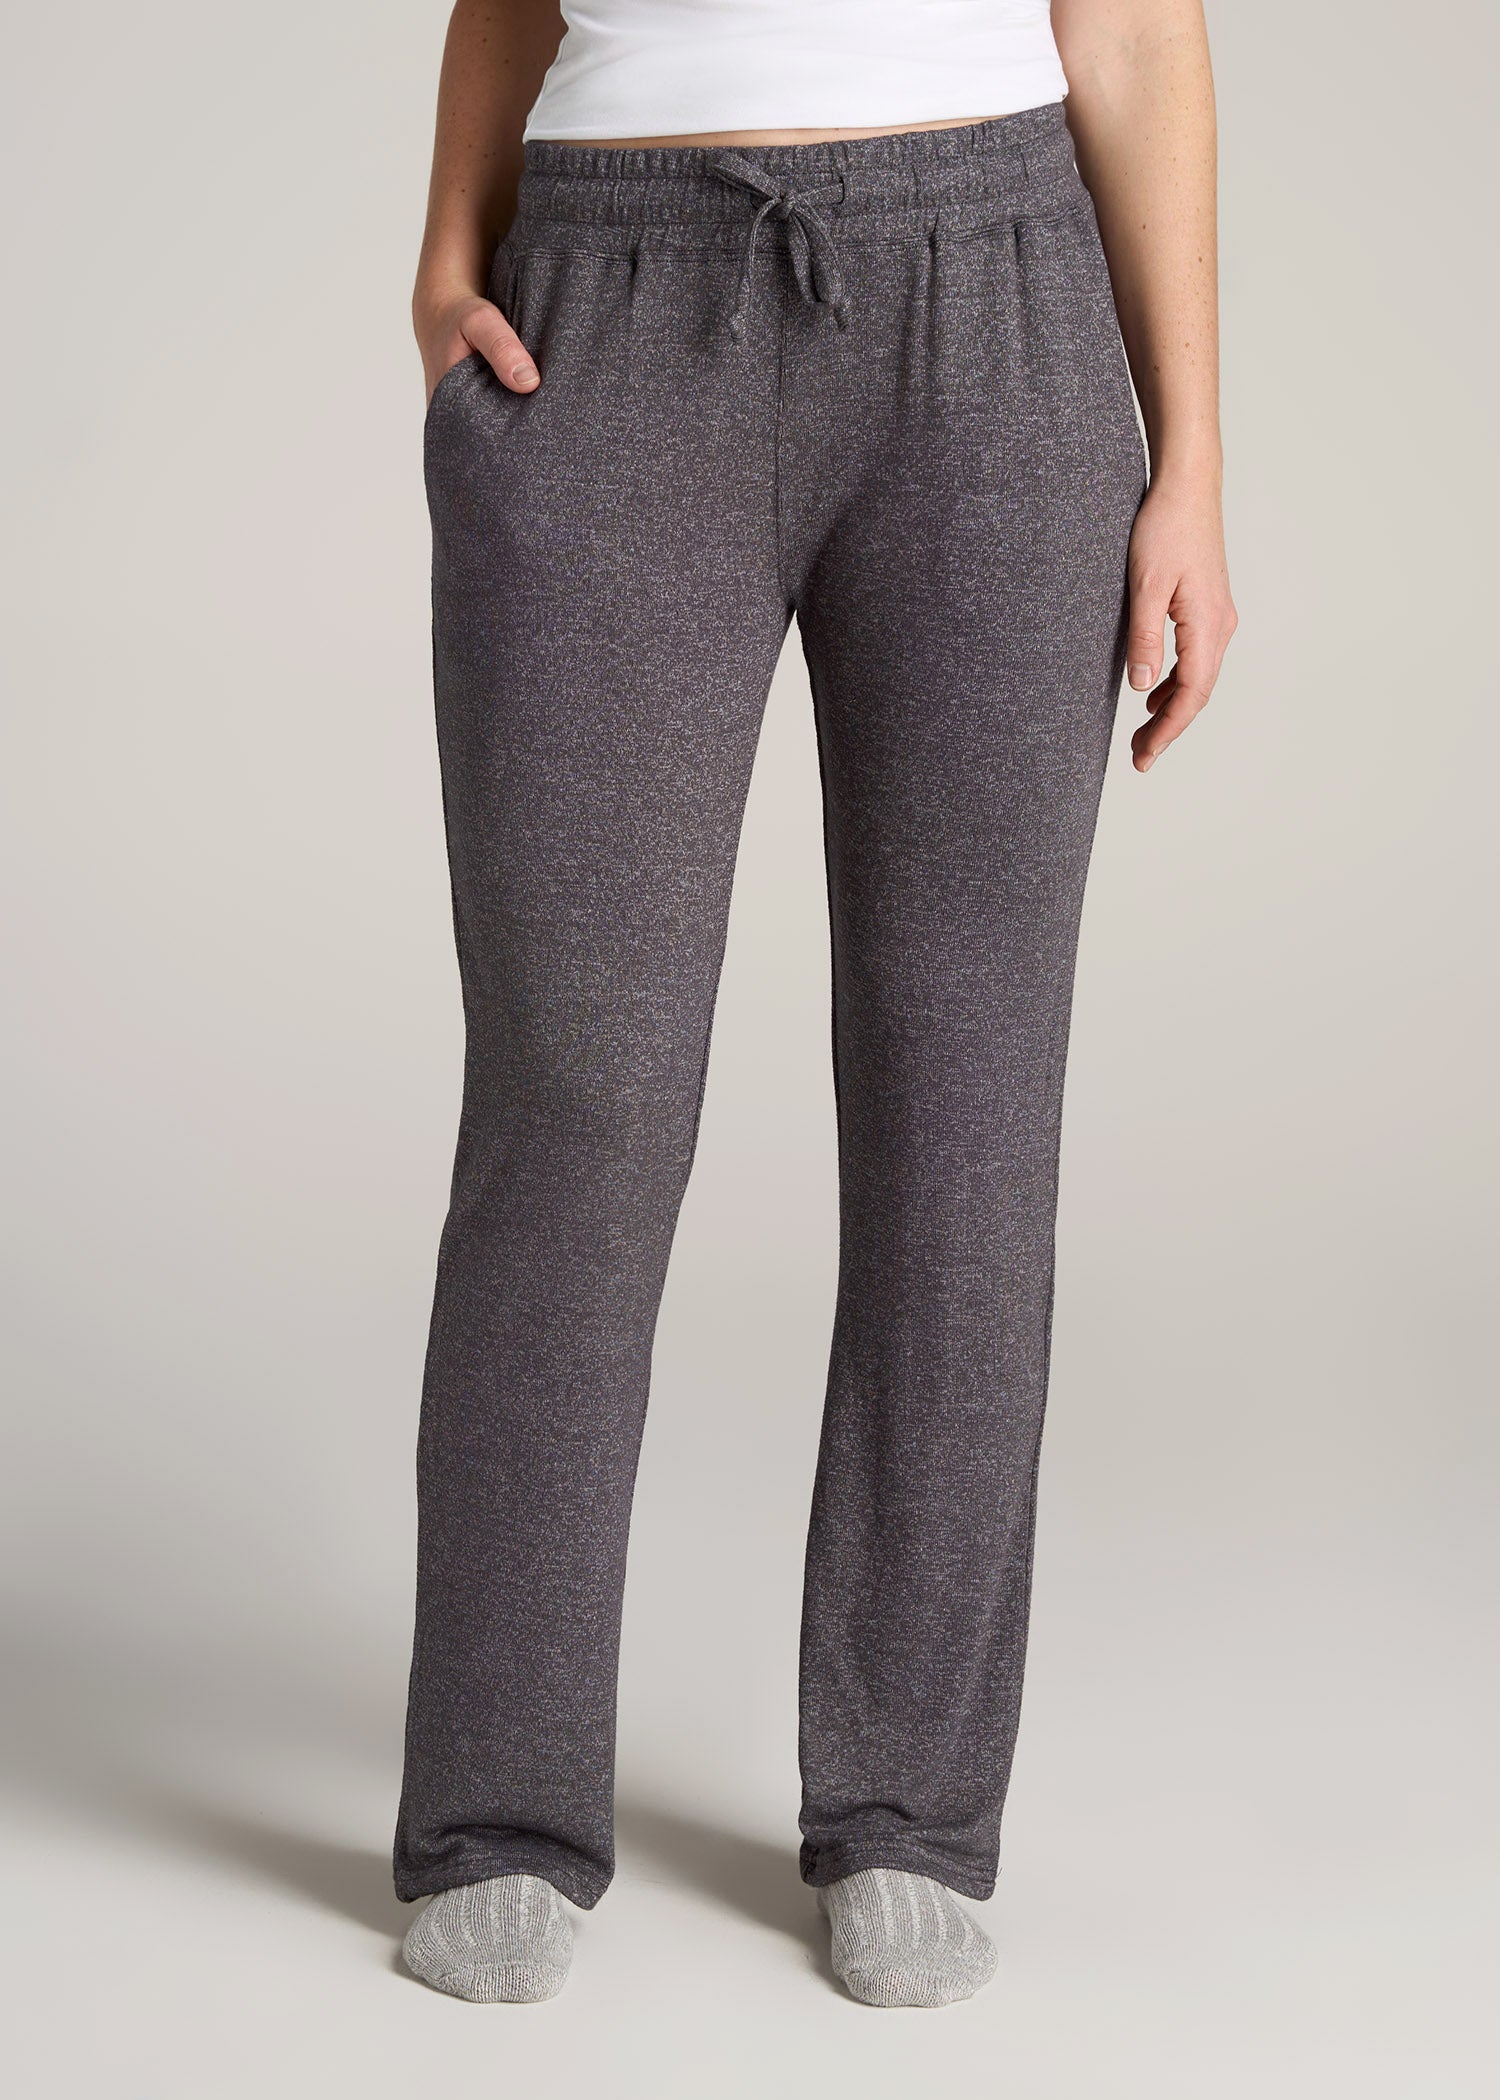 HDE Pajama Pants for Women PJ Pants Comfy Loungewear Charcoal 1X Plus -  Walmart.com